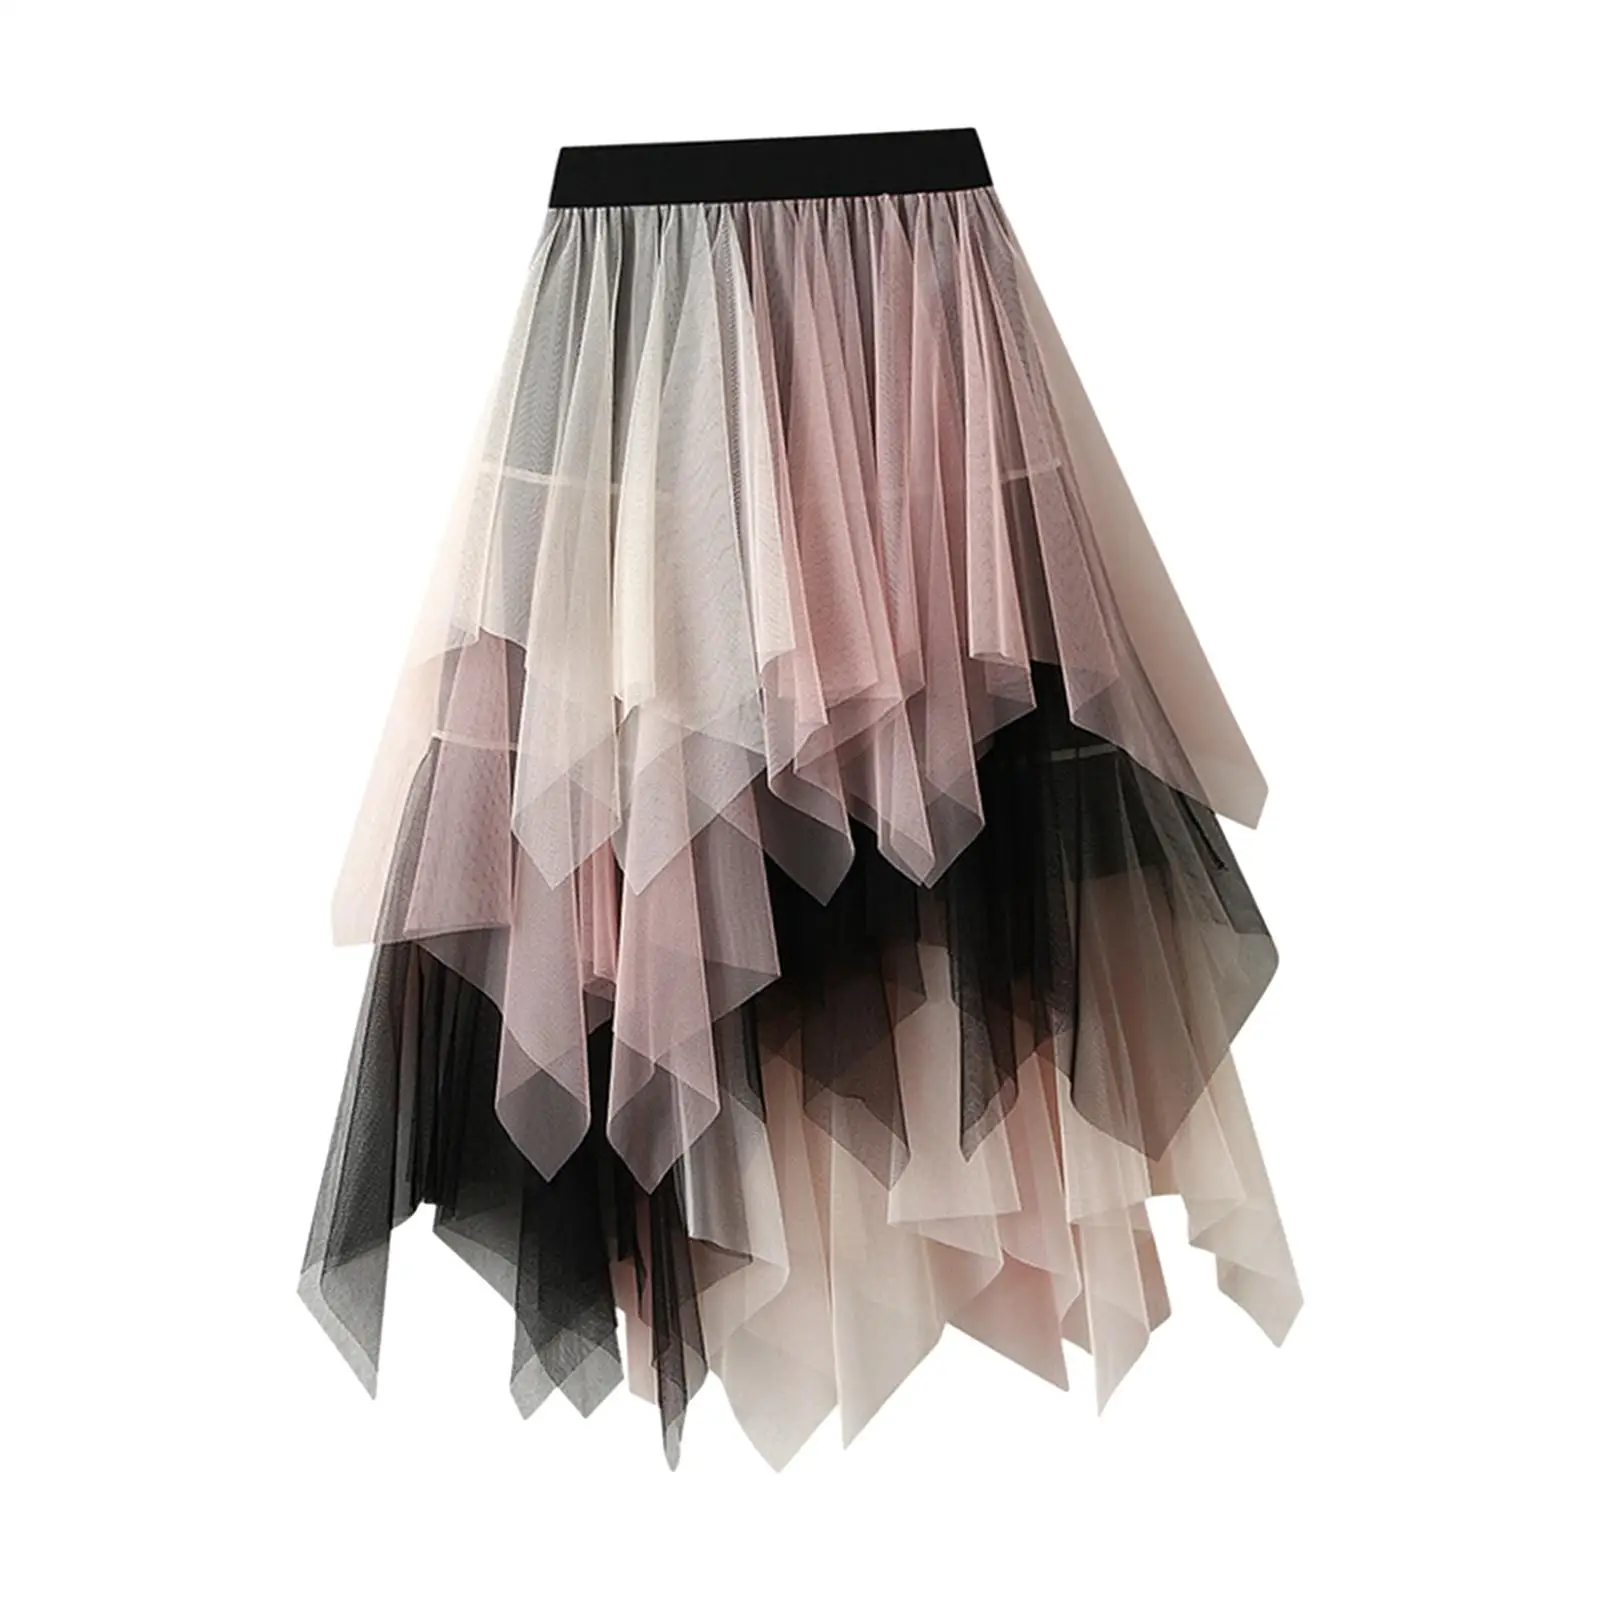 Tulle Skirts for Women Elastic High Waist Asymmetrical Summer MIDI Long Half Skirt for Casual Formal Evening Party Prom Wedding